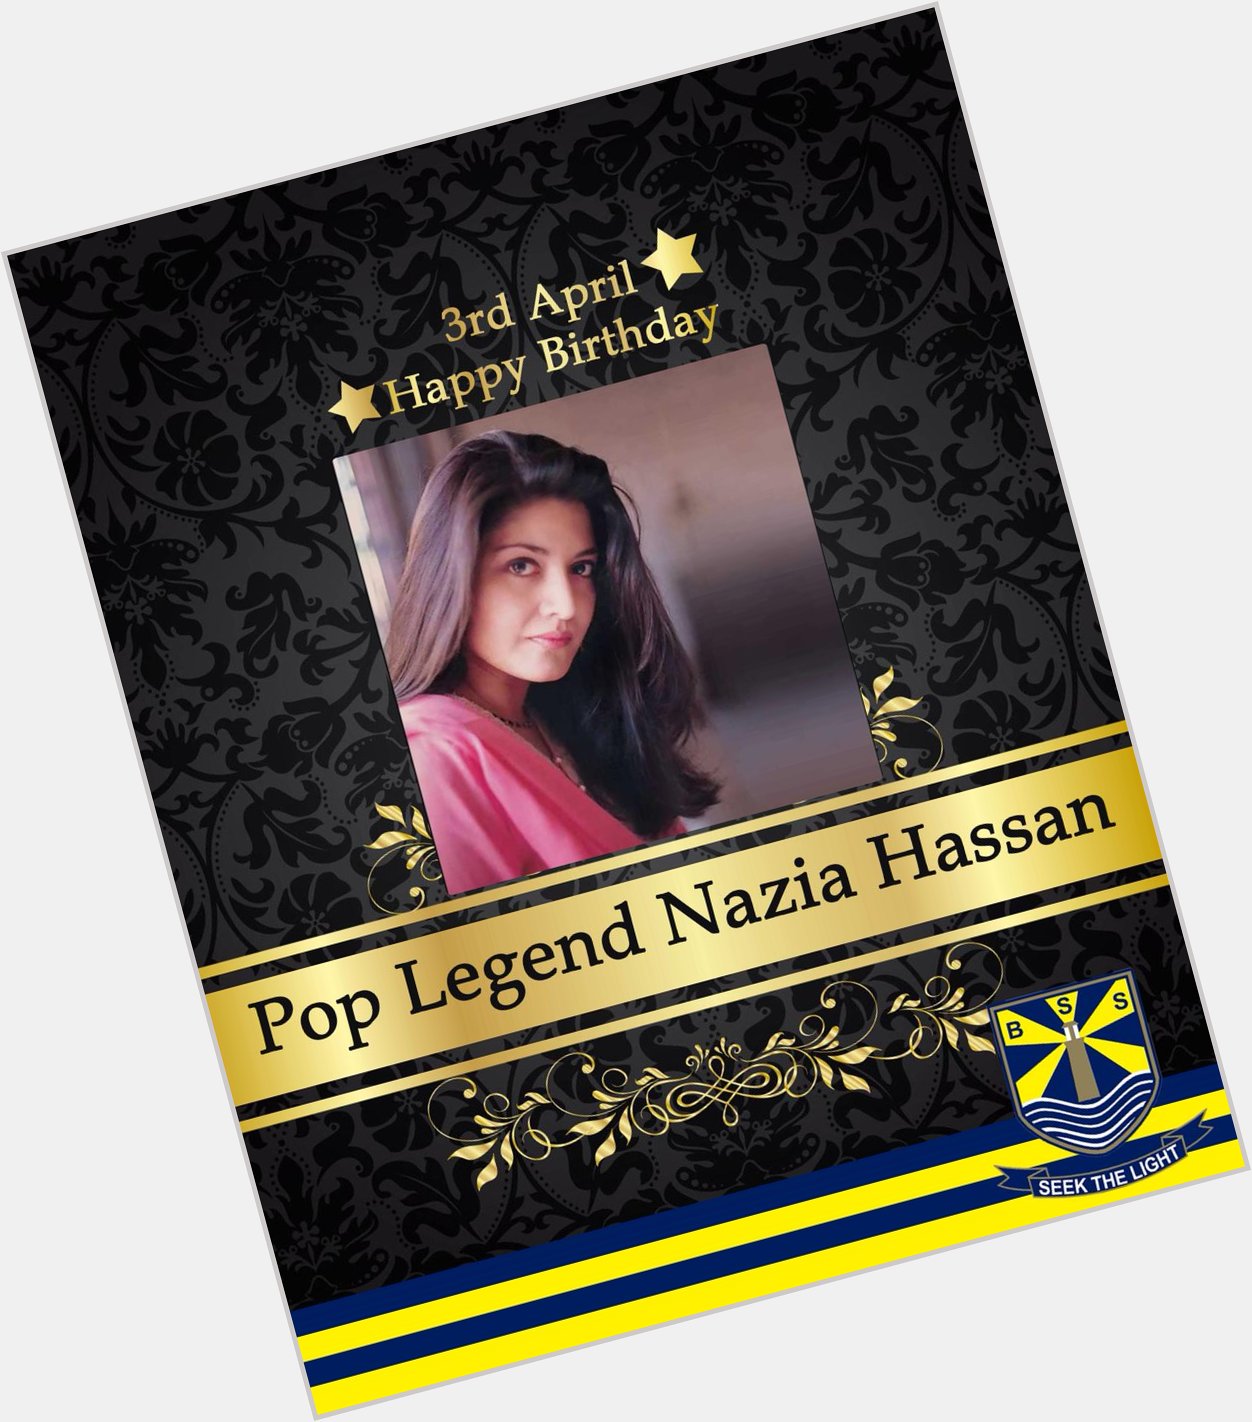 Happy Birthday to Pop Legend Nazia Hassan 